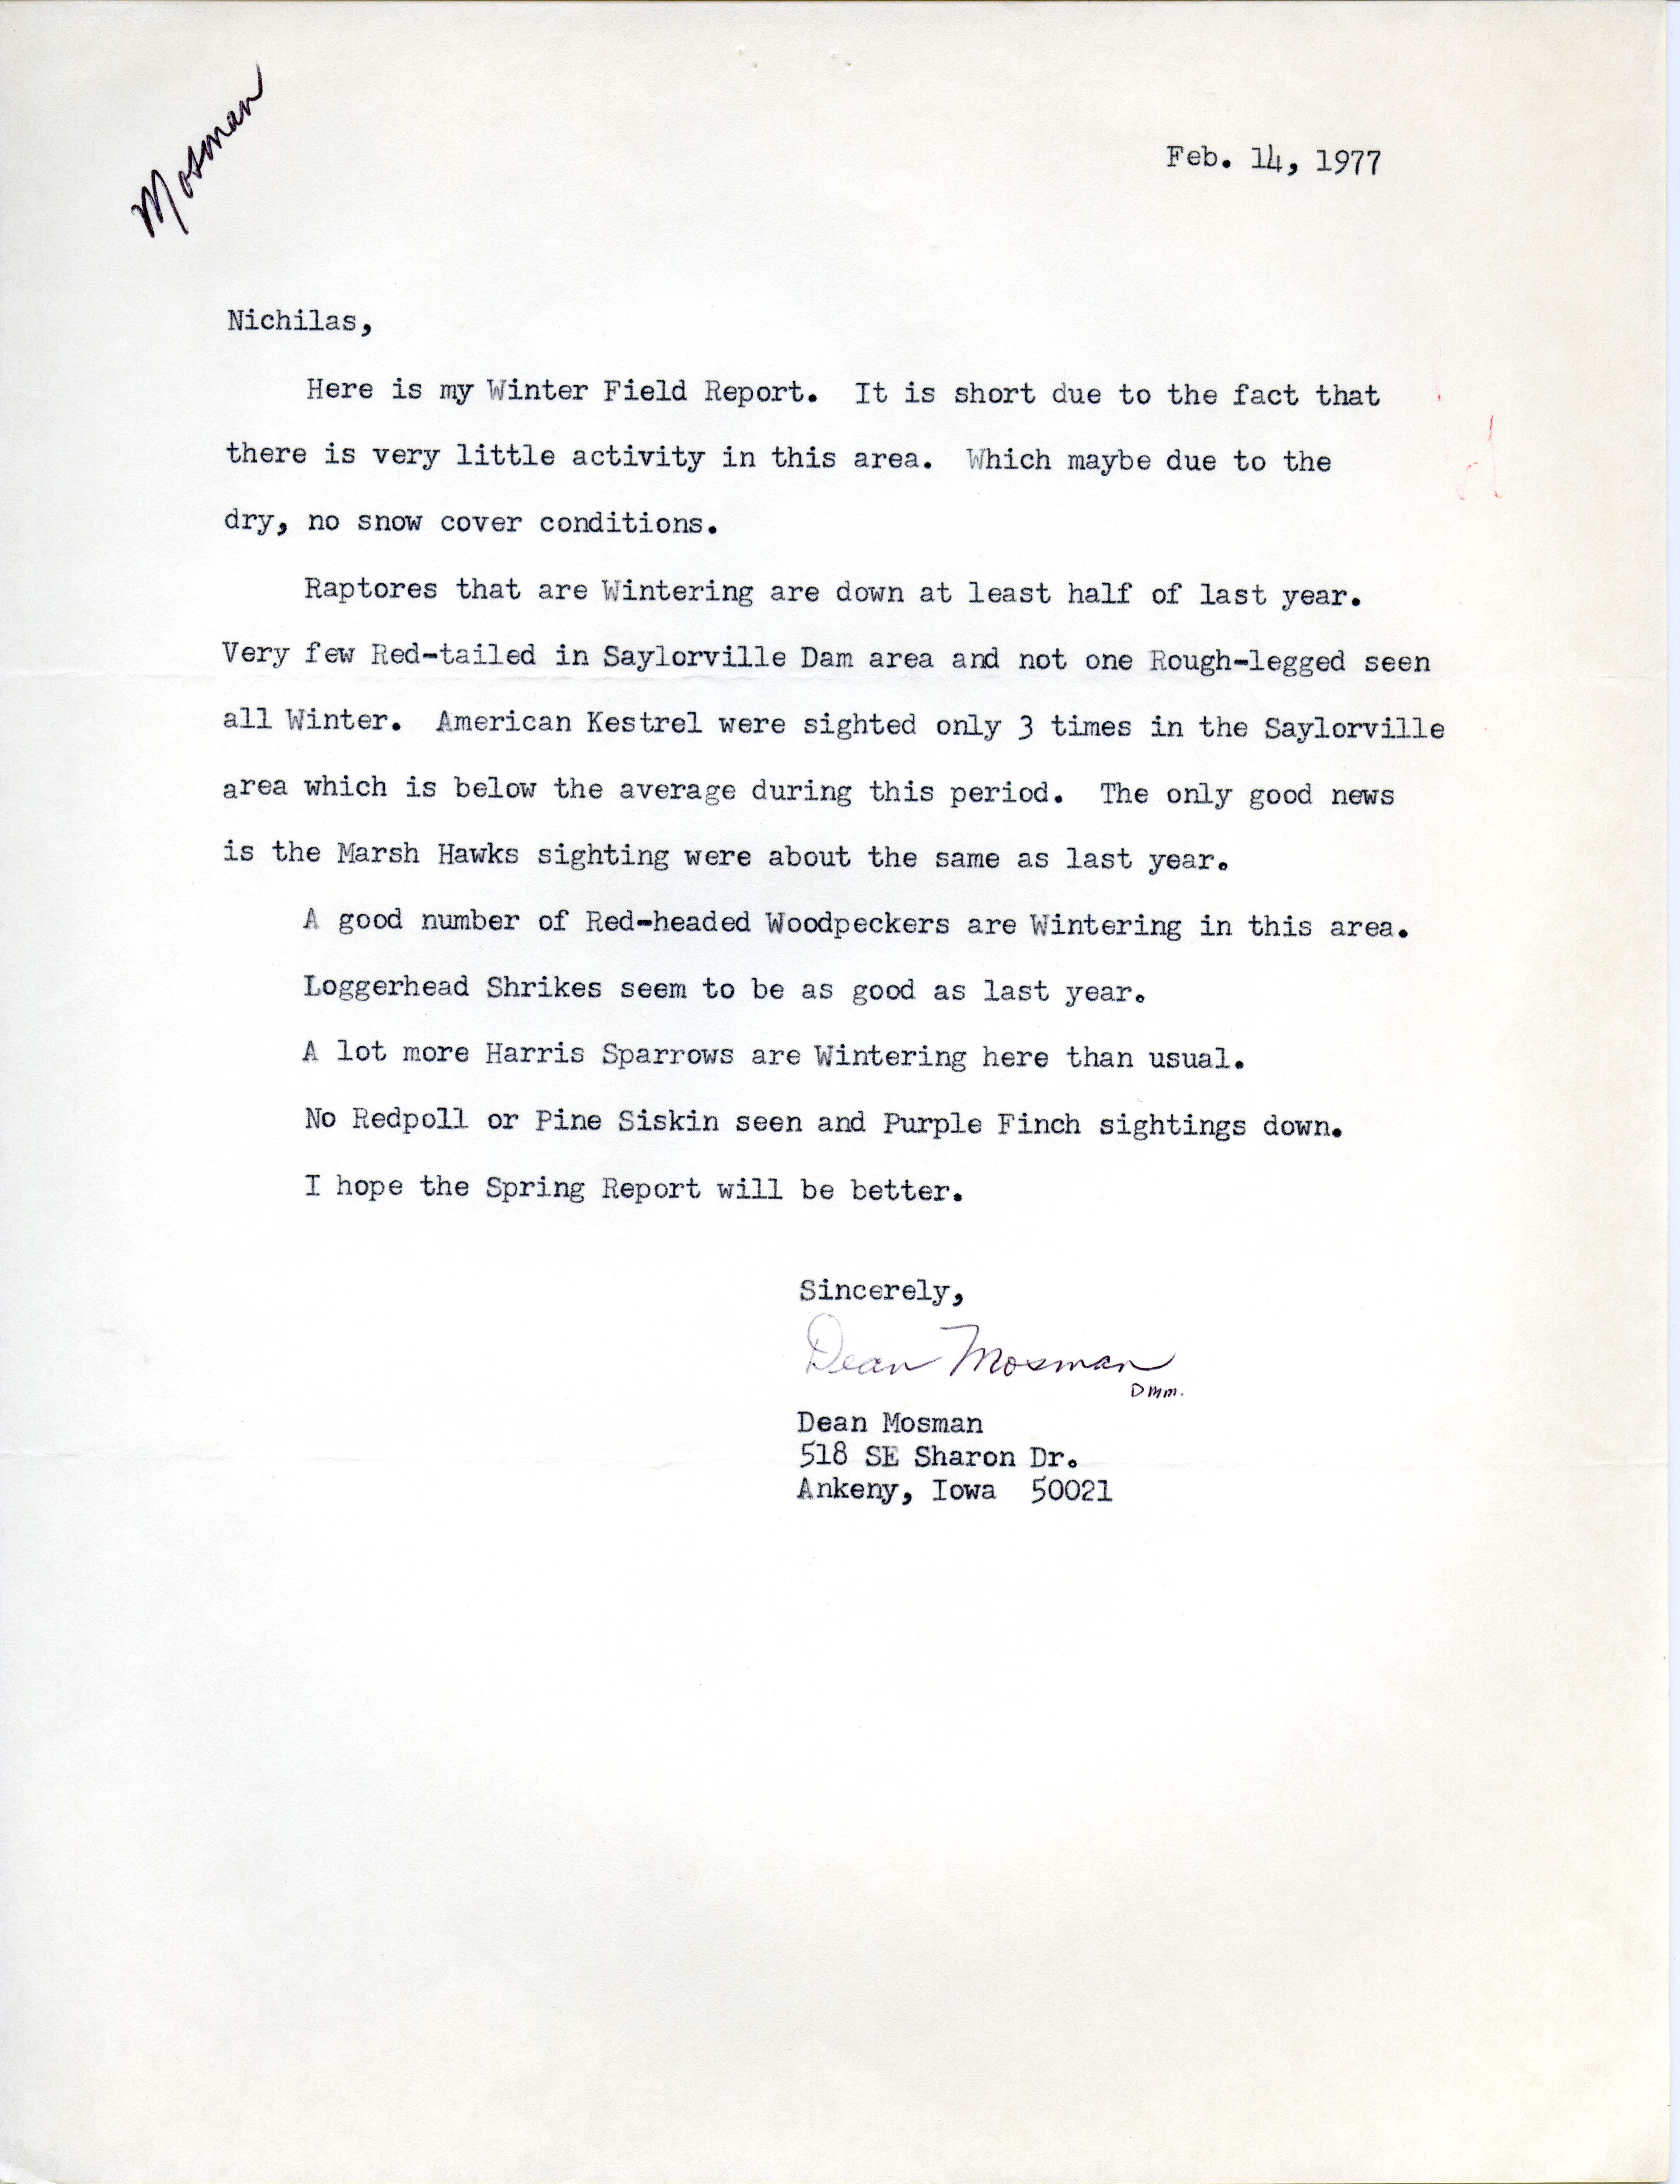 Dean Mosman letter to Nicholas S. Halmi regarding bird sightings at Saylorville Dam, February 14, 1977